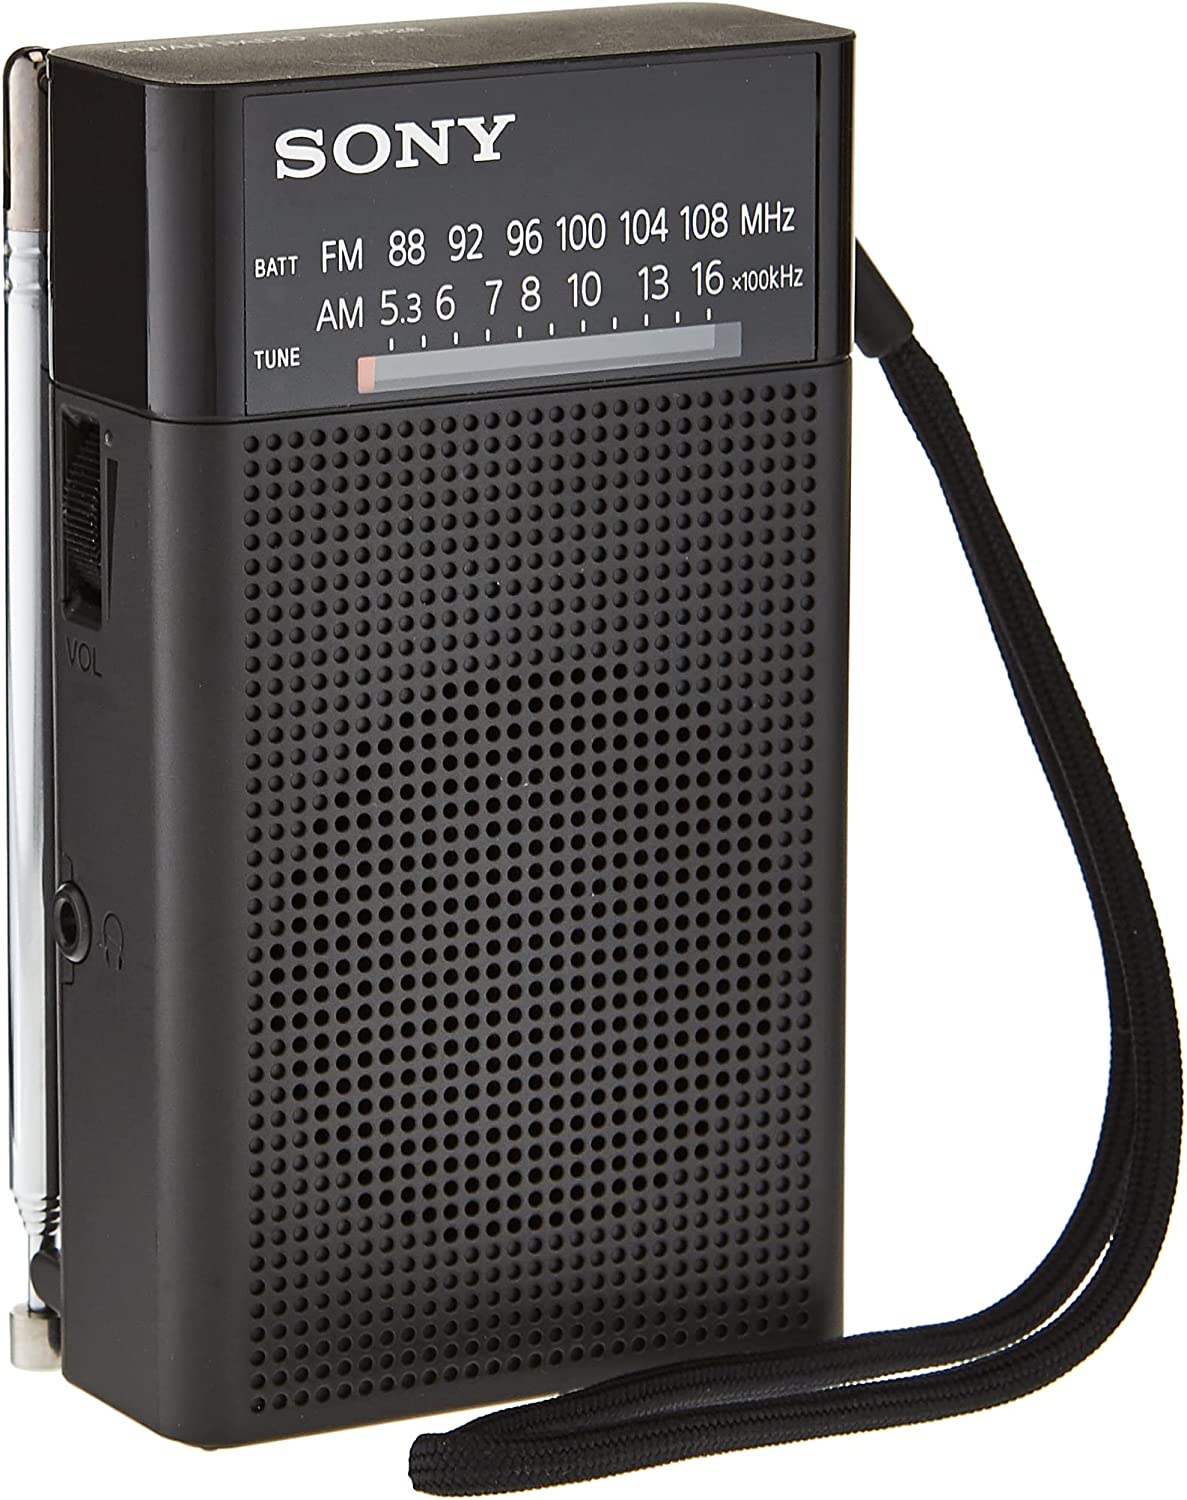 Sony ICFP26 Built-In Speaker Portable AM Radio